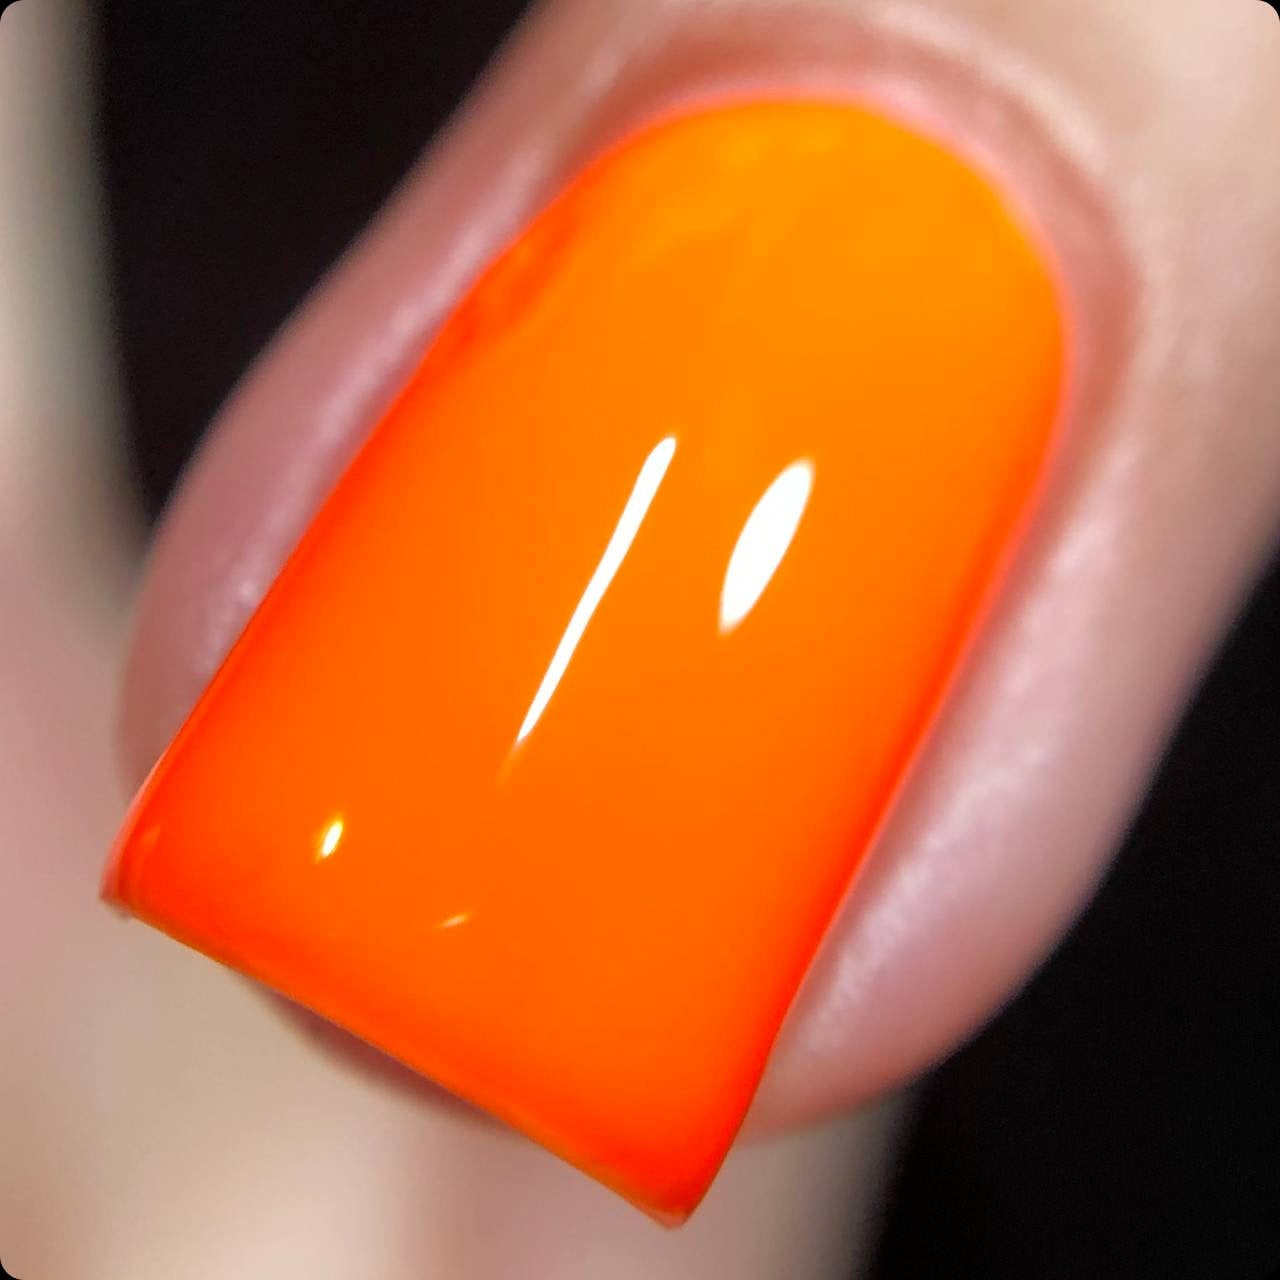 Semilac 566 Neon Orange UV Gel 7ml